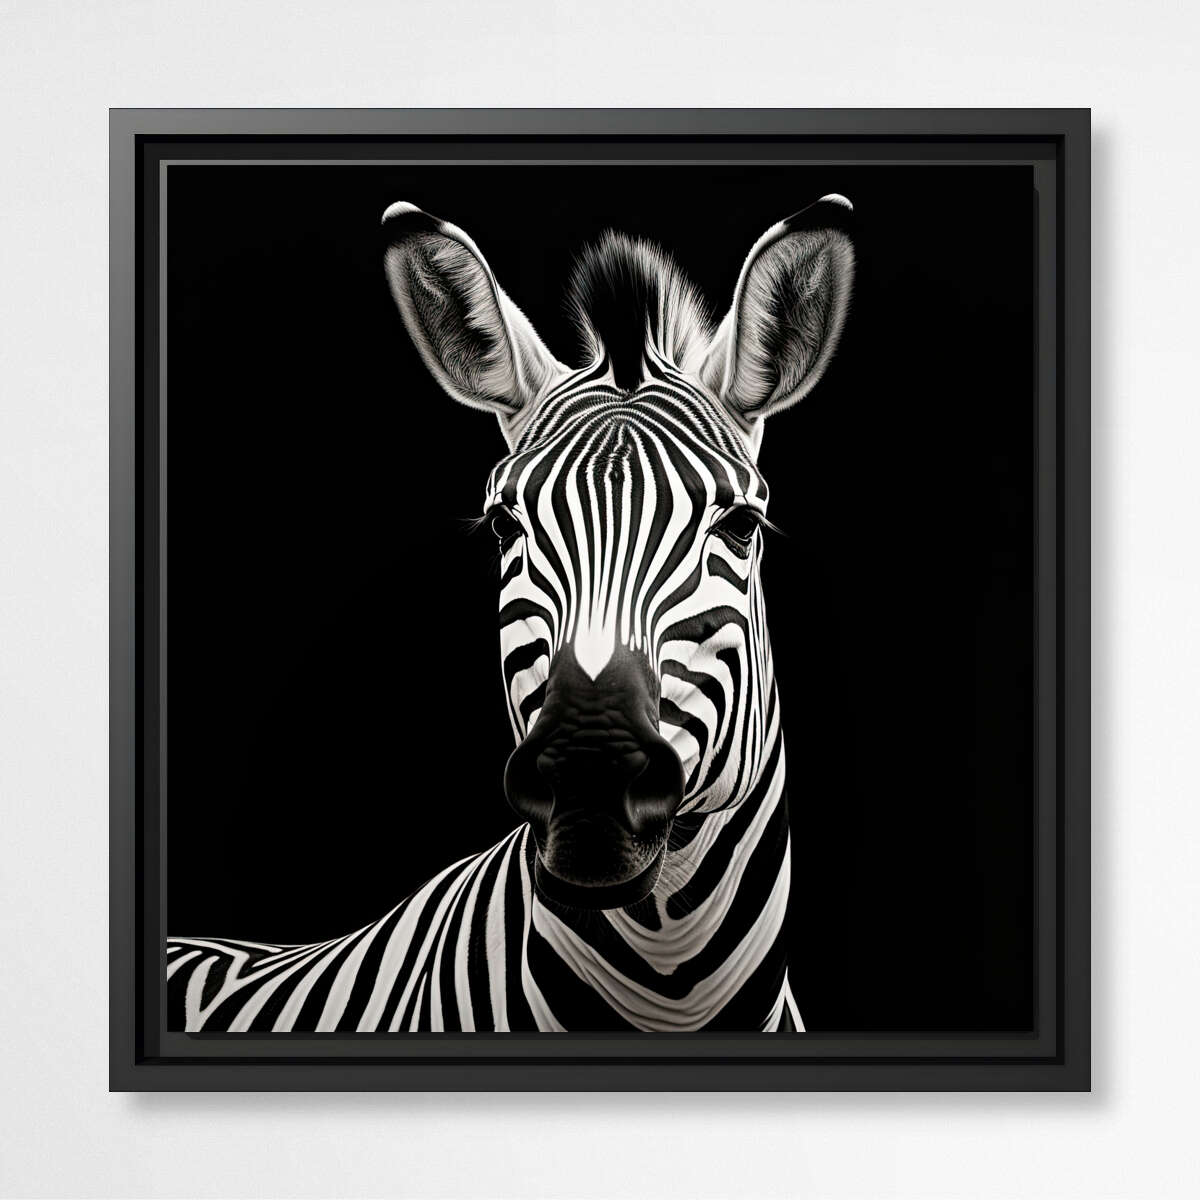 Sleek Monochrome Zebra Canvas Print| Modern Animal Art | Animals Wall Art Prints - The Canvas Hive